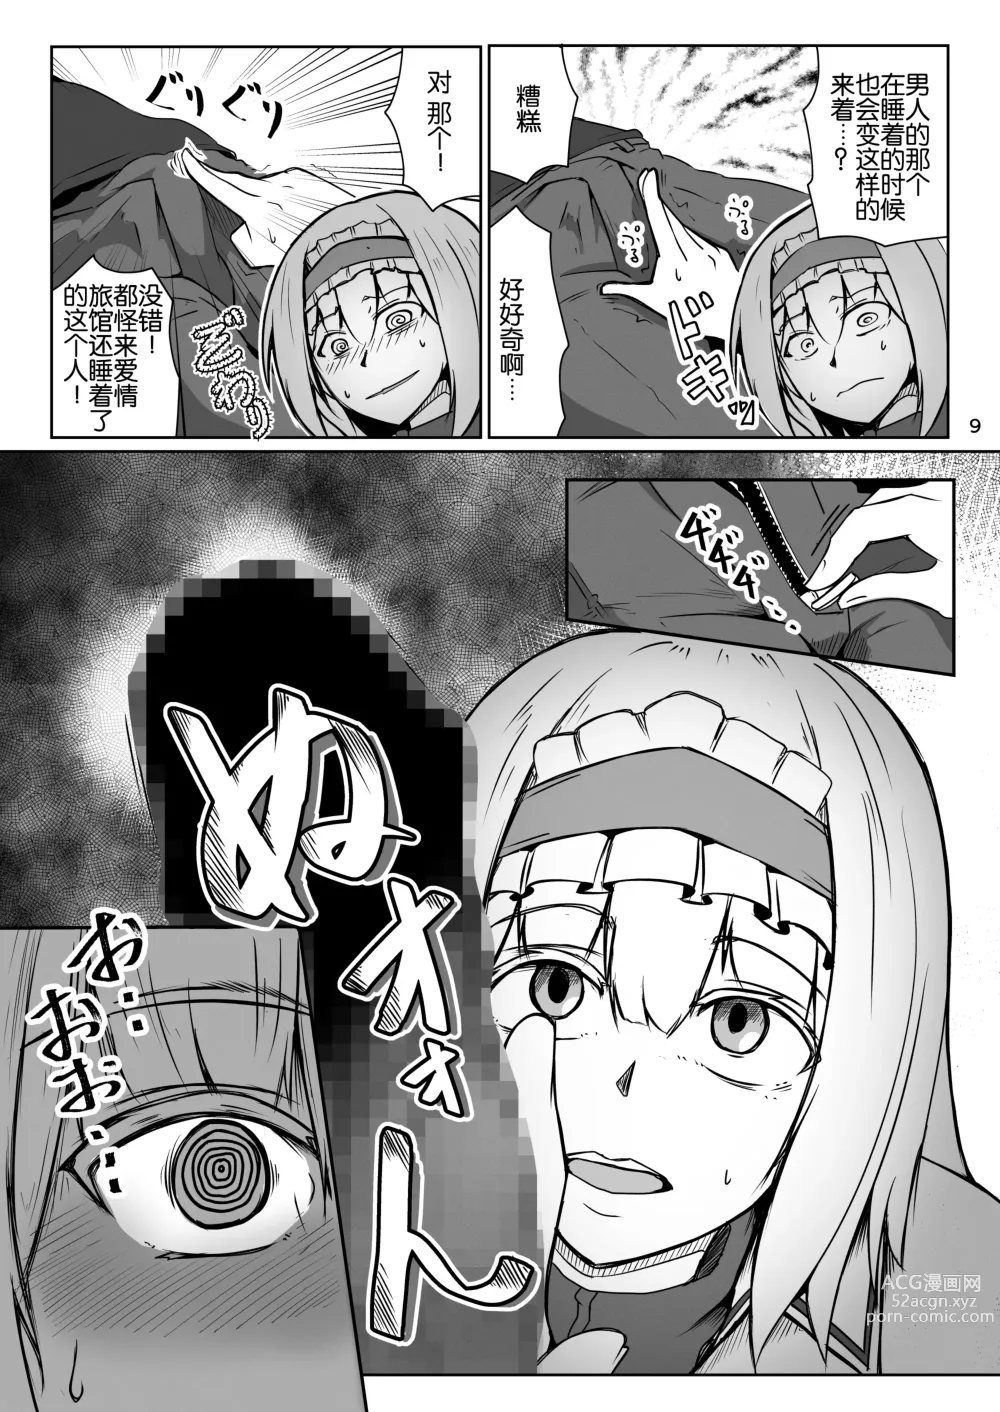 Page 9 of doujinshi Cosplay Uriko no Otomodachi Daisannwa: Fast Cosex!